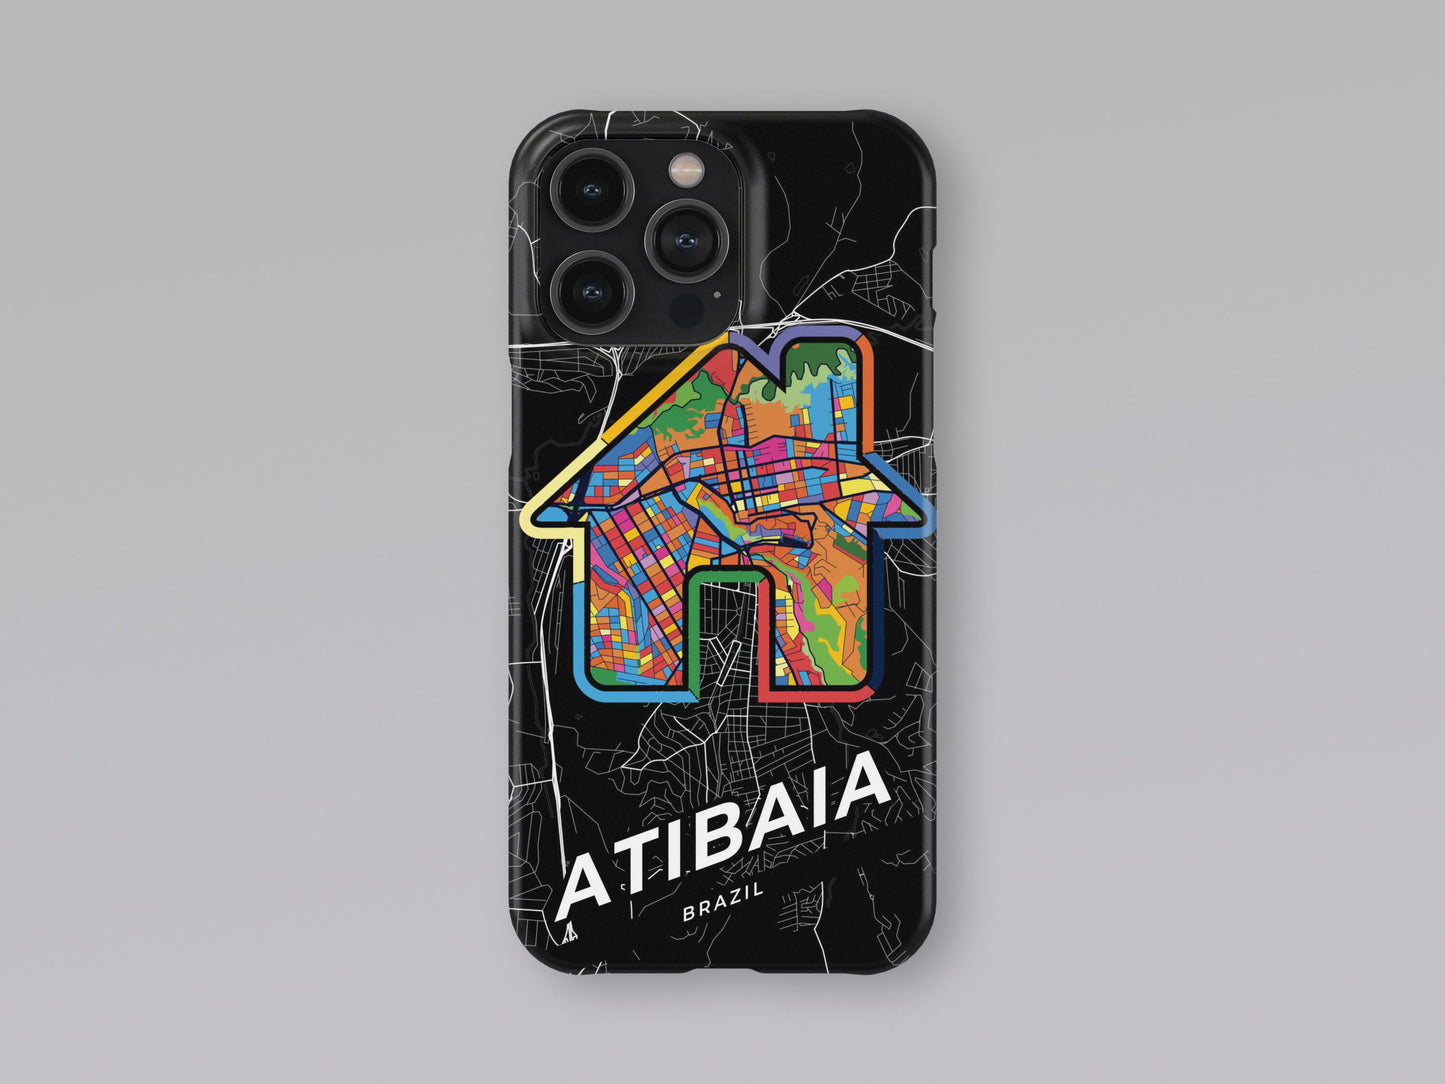 Atibaia Brazil slim phone case with colorful icon. Birthday, wedding or housewarming gift. Couple match cases. 3